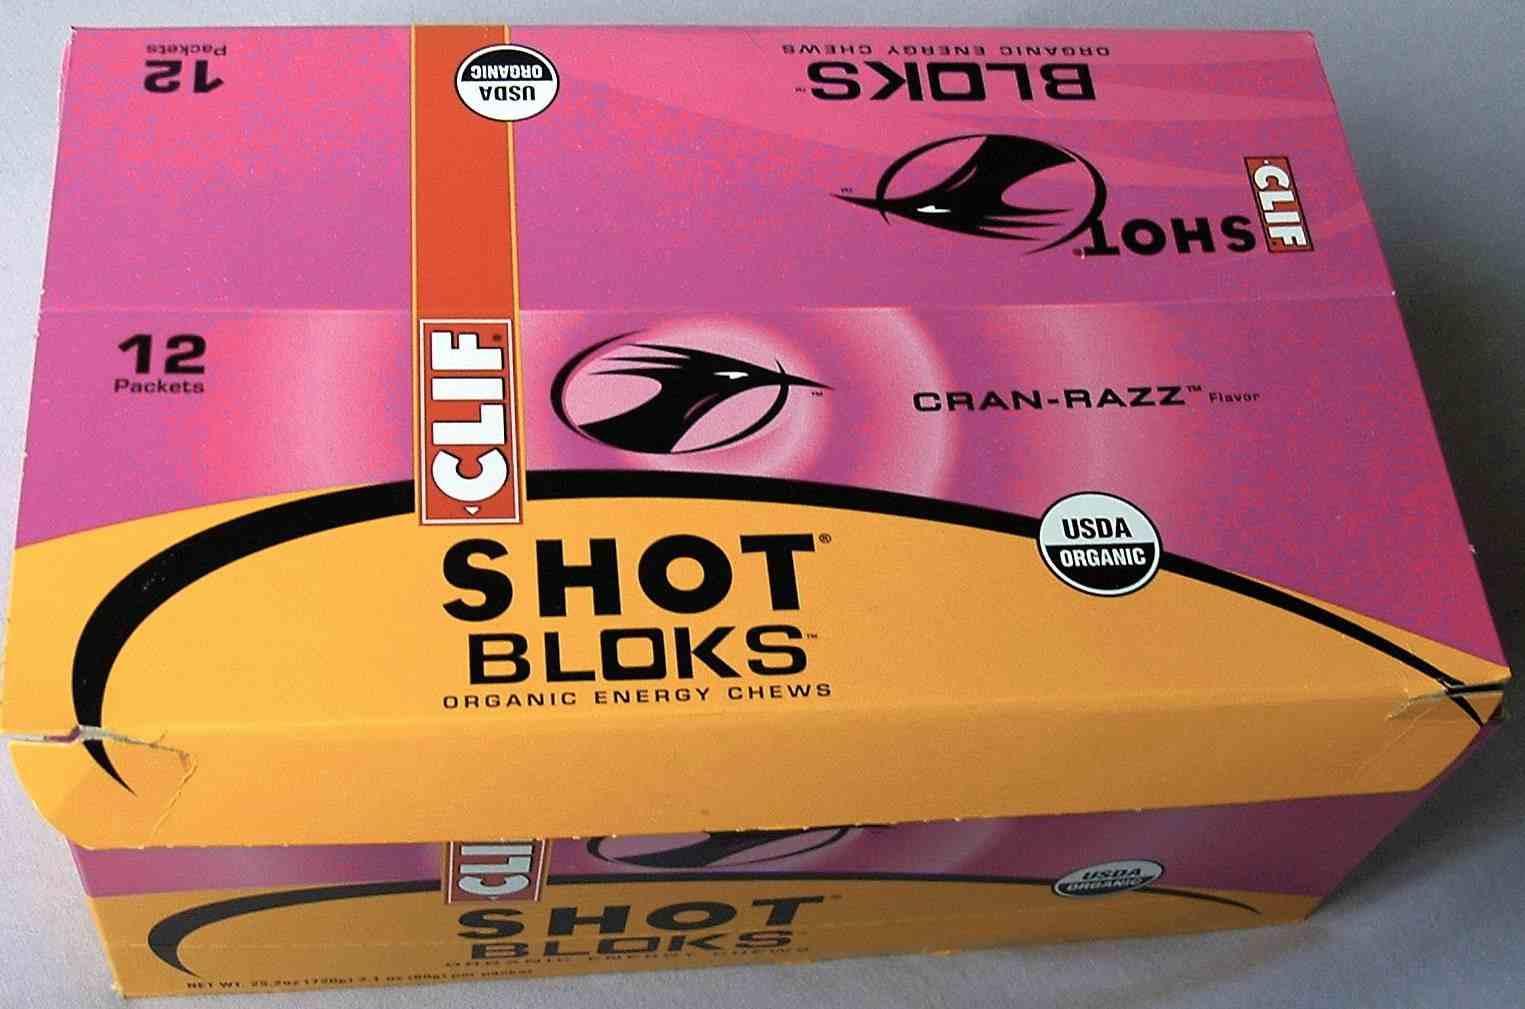 Clif Shot Bloks